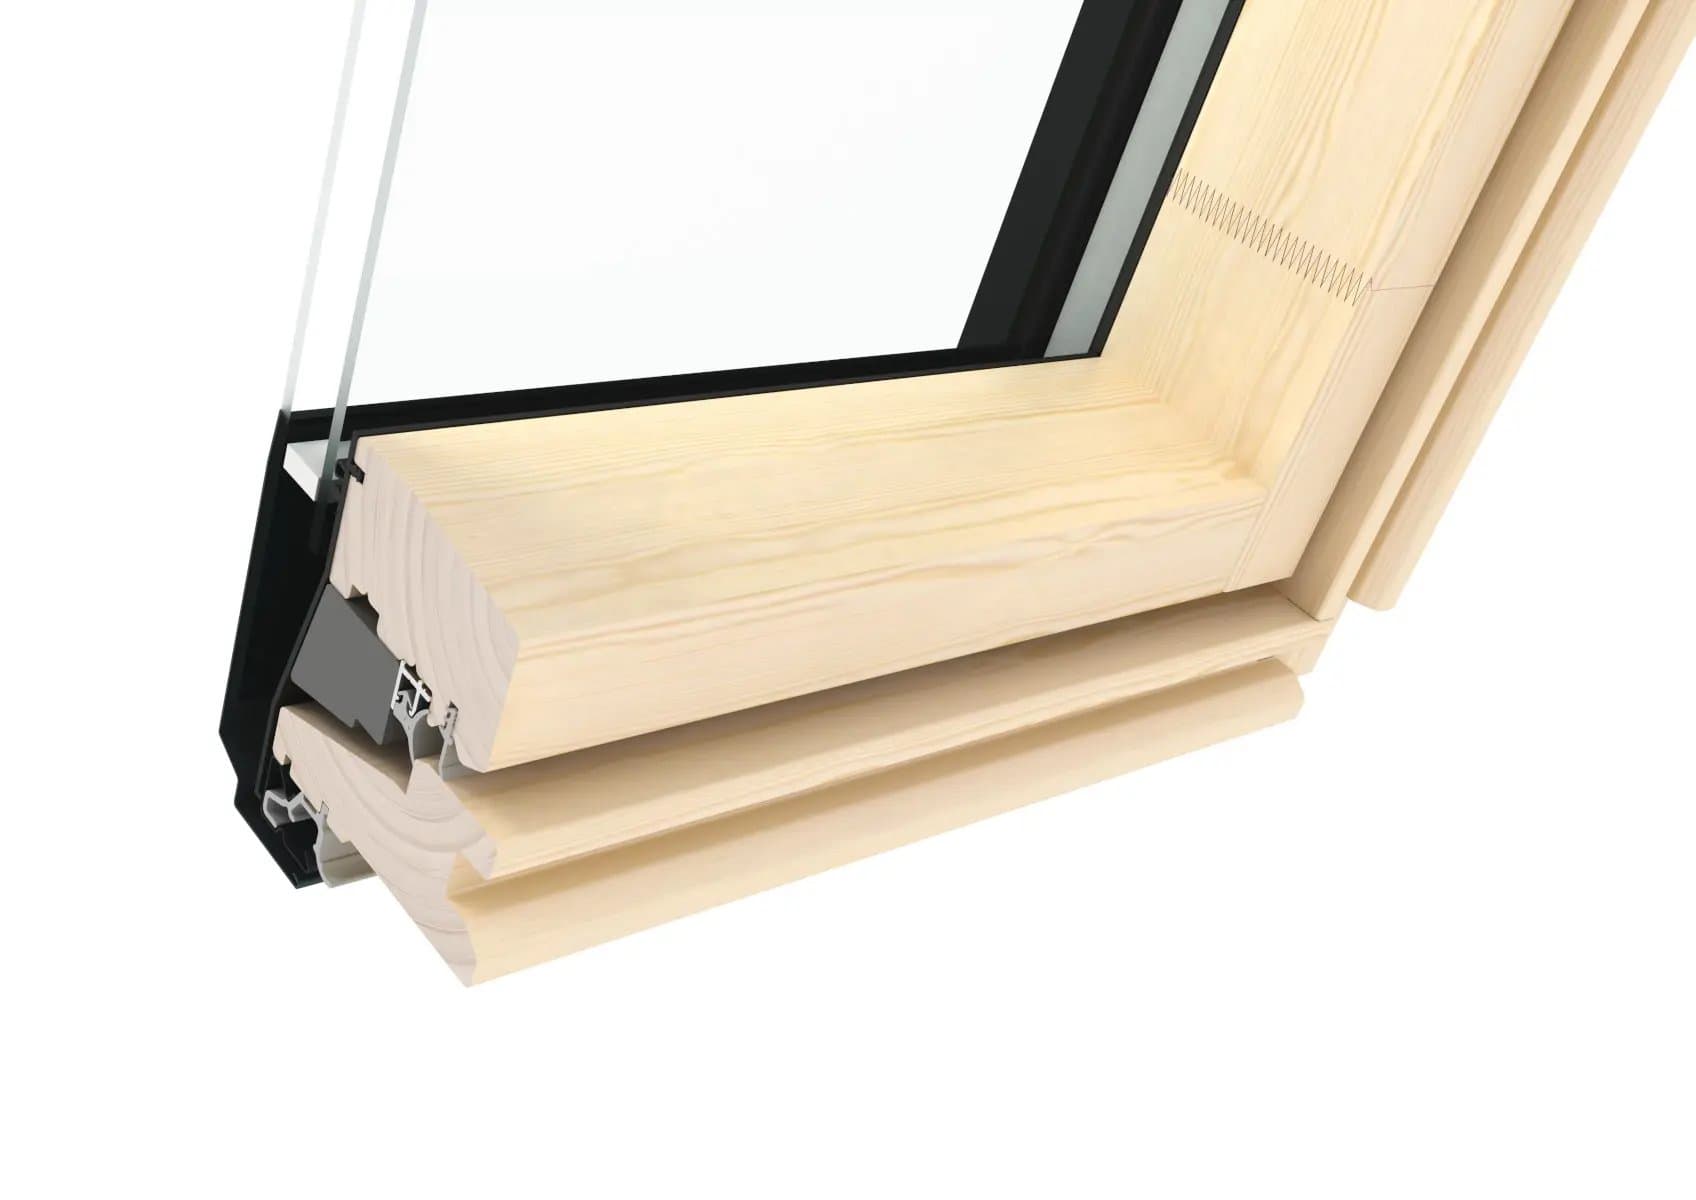 Окно мансардное деревянное RotoQ Q42S H100L1. 1 камерное. Ручка сверху. Вентклапан.